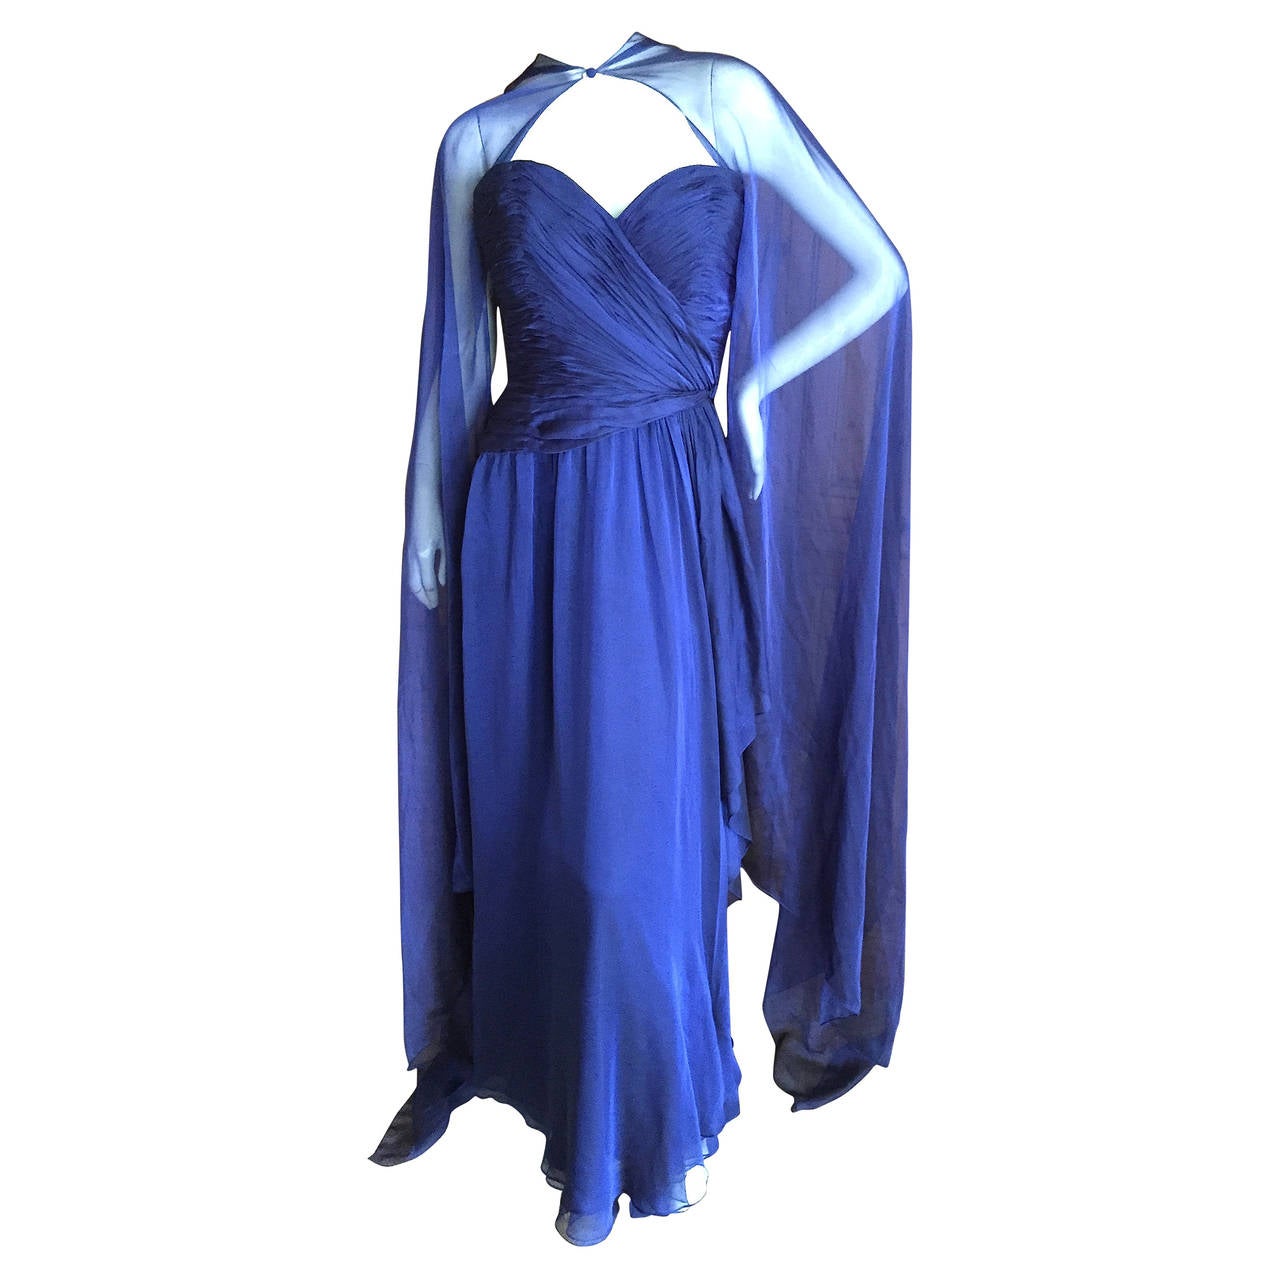 Oscar de la Renta Midnight Blue Ruched Dress w Matching Cape